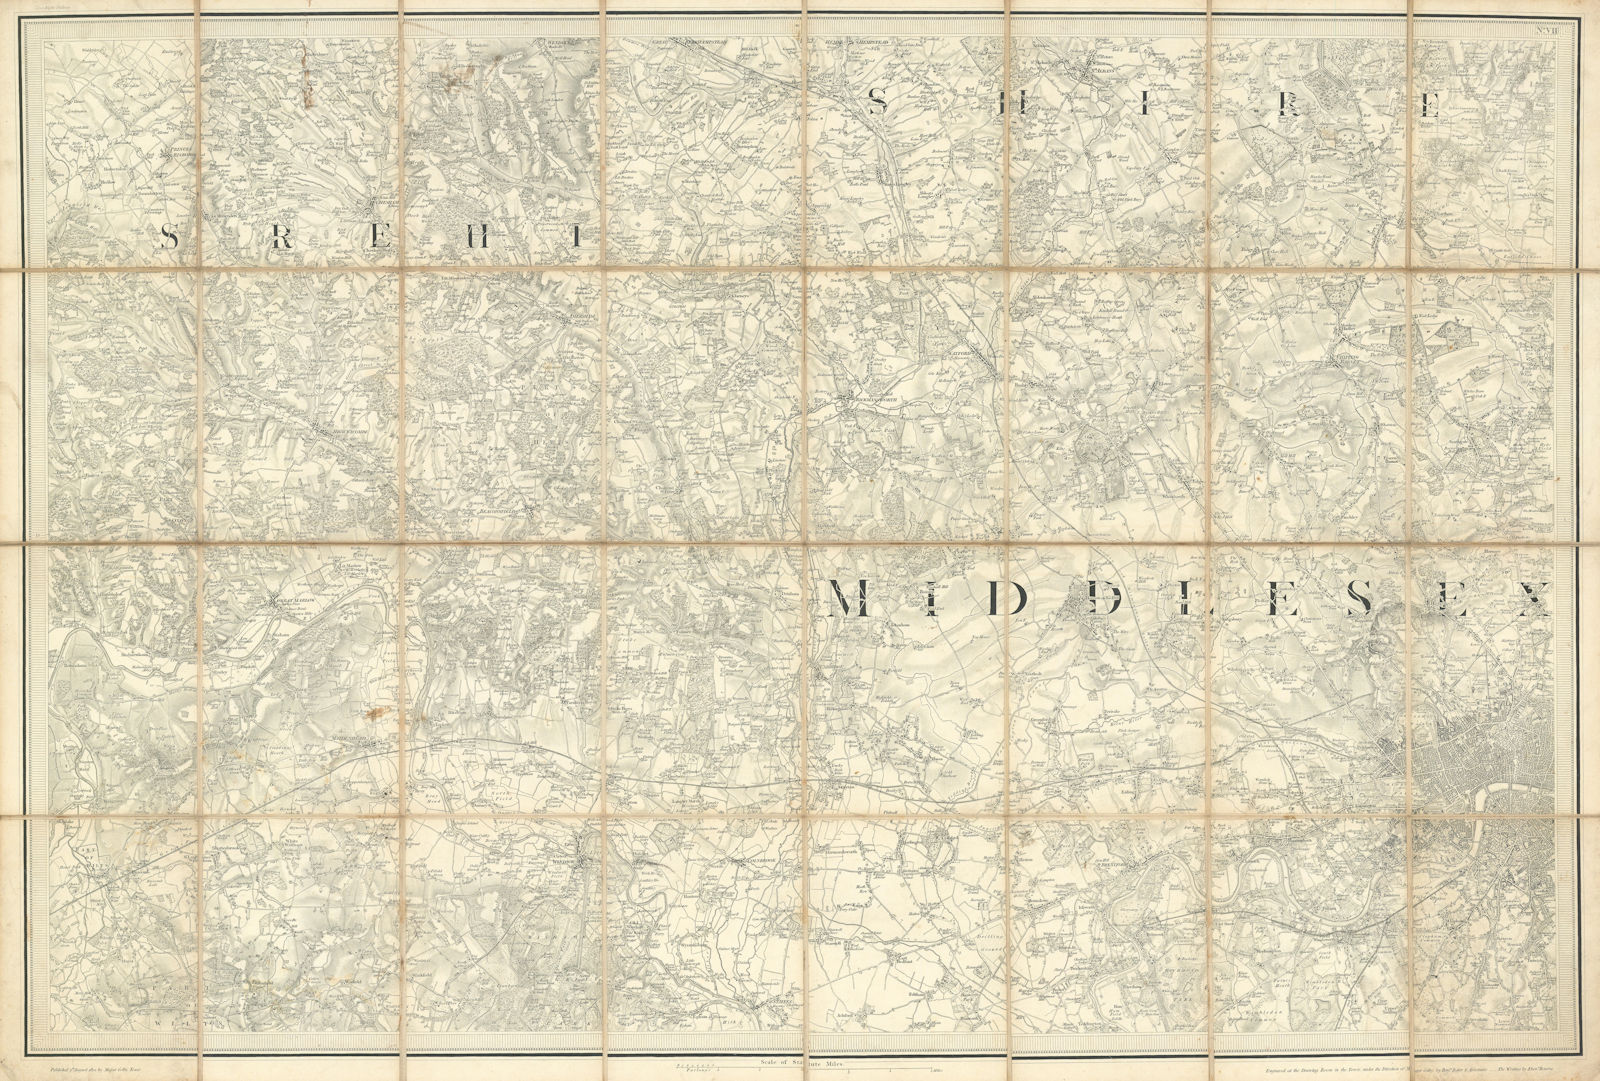 Ordnance Survey Sheet VII Chilterns, Thames Valley, West London 96x65cm 1822 map